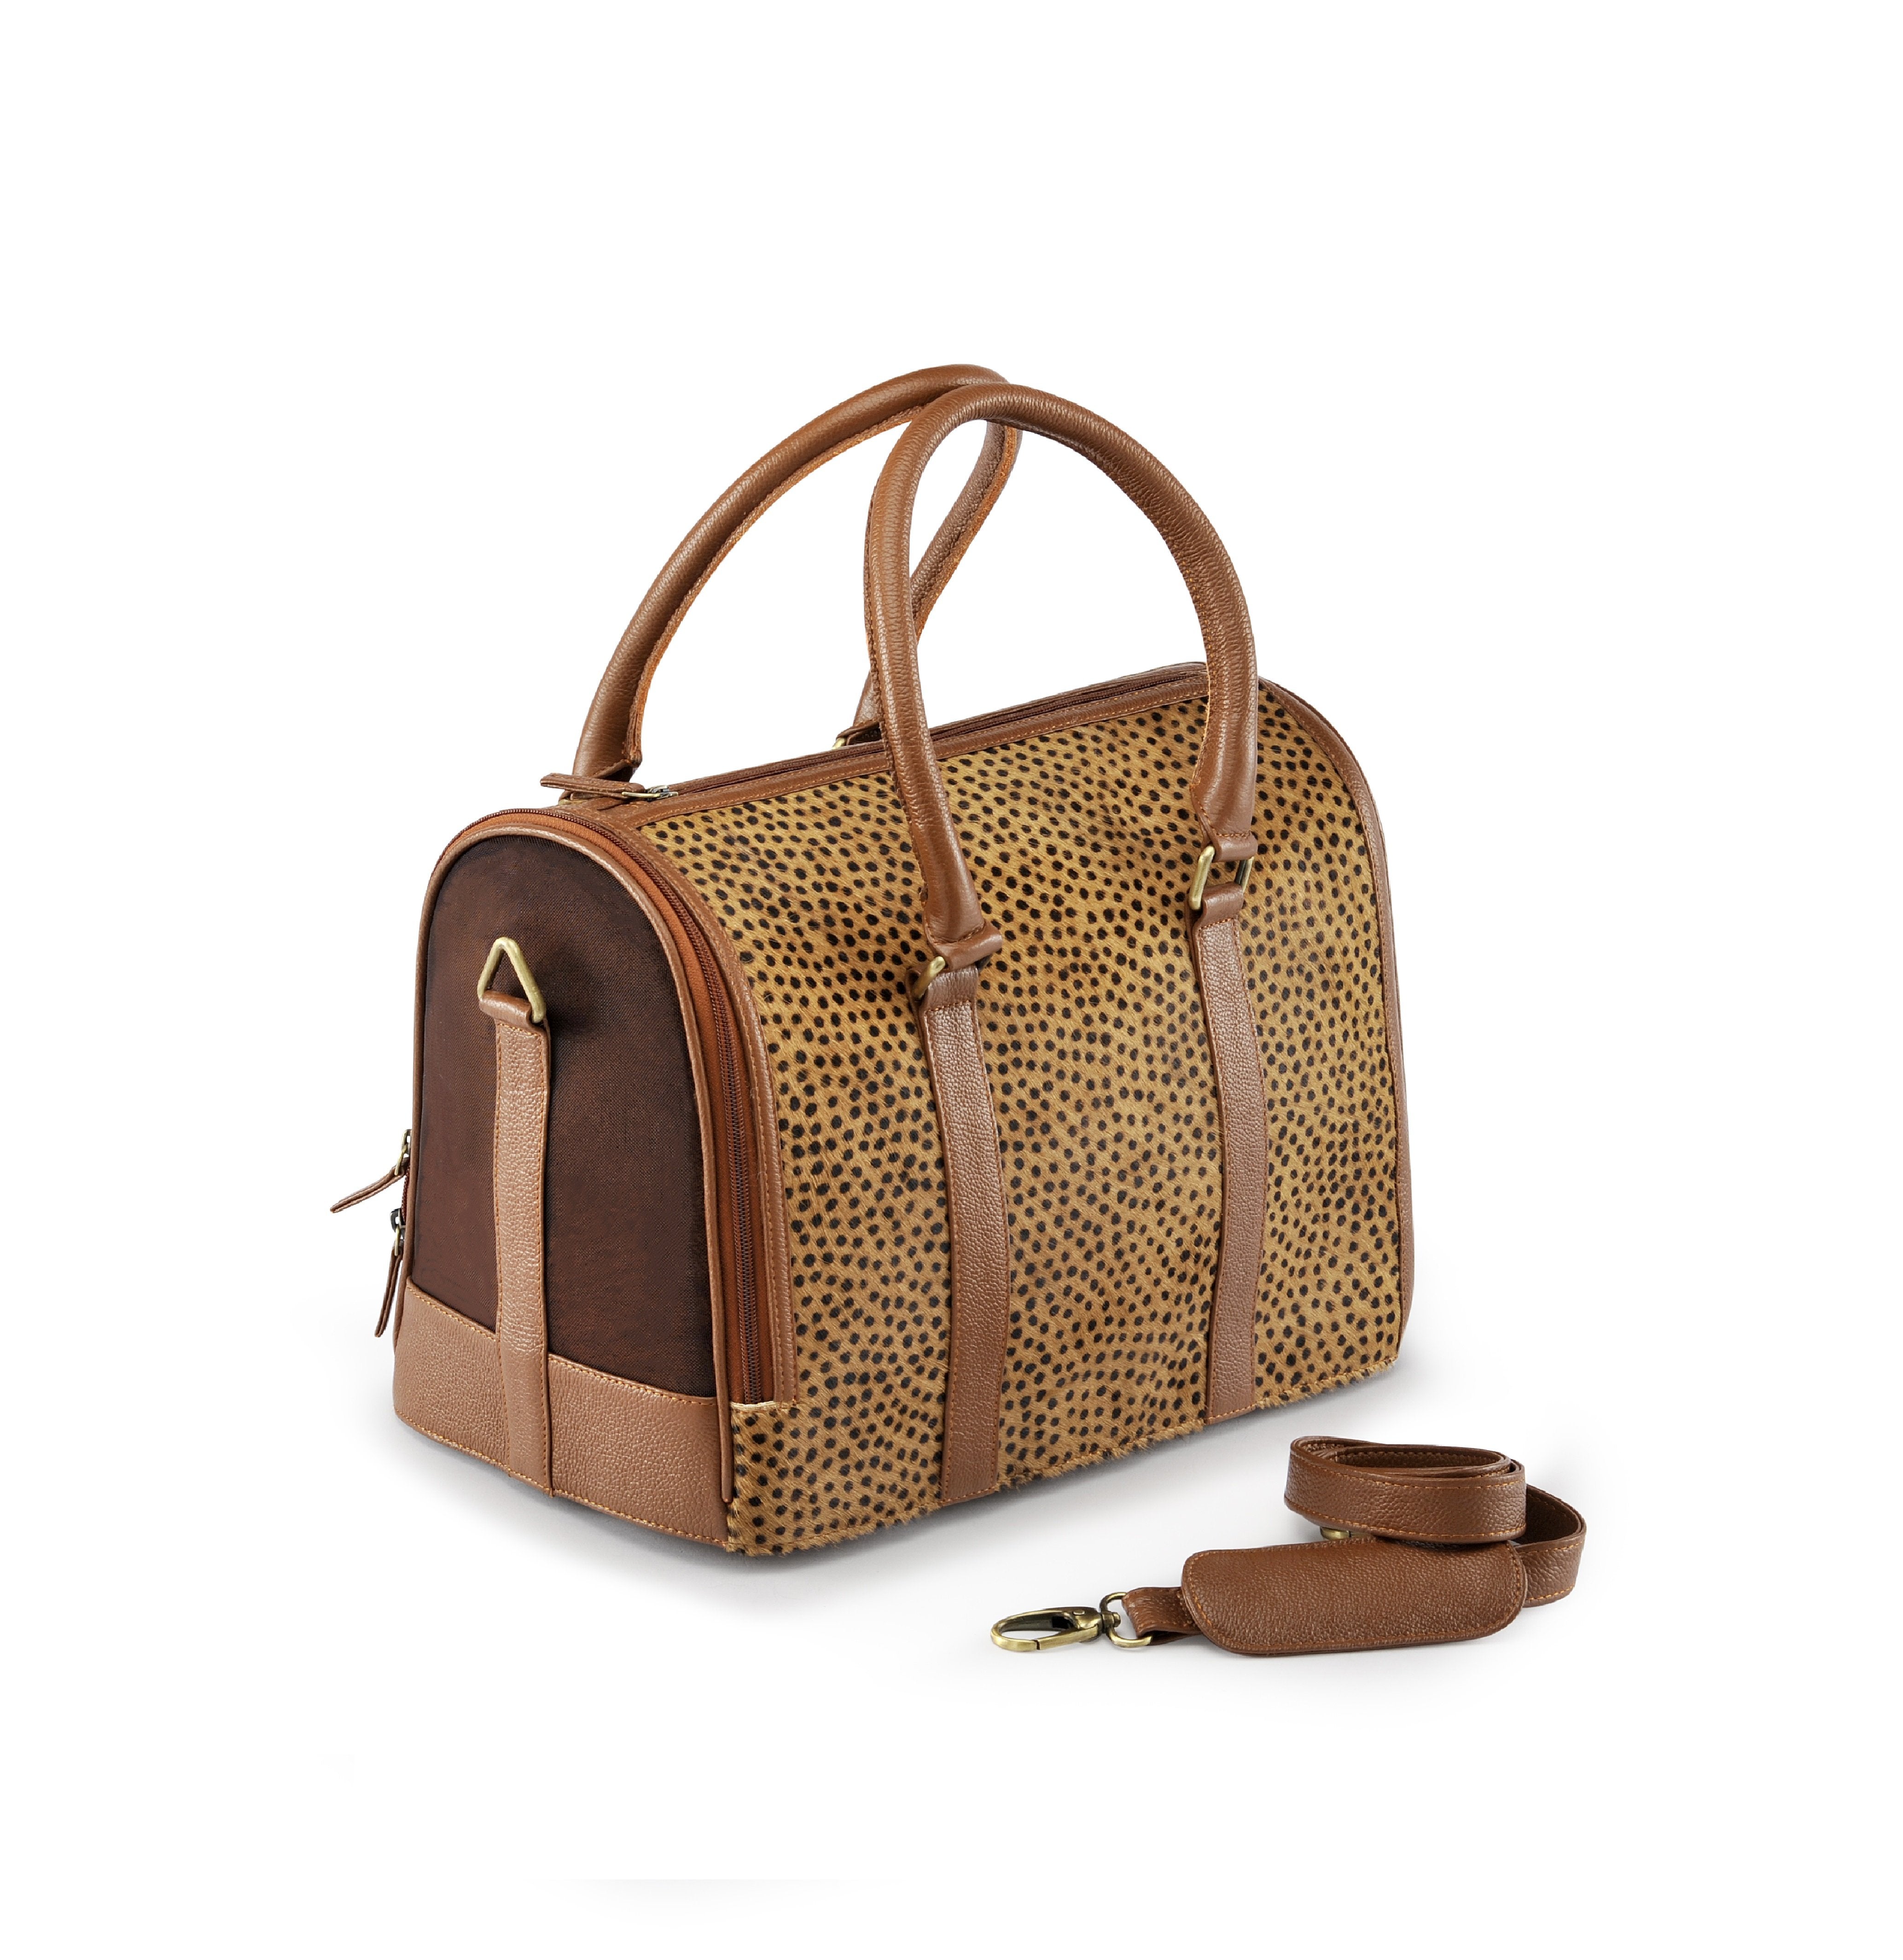 Brunette Leather Animal Print Bag-Handbag-Biozoo-Biozoopets